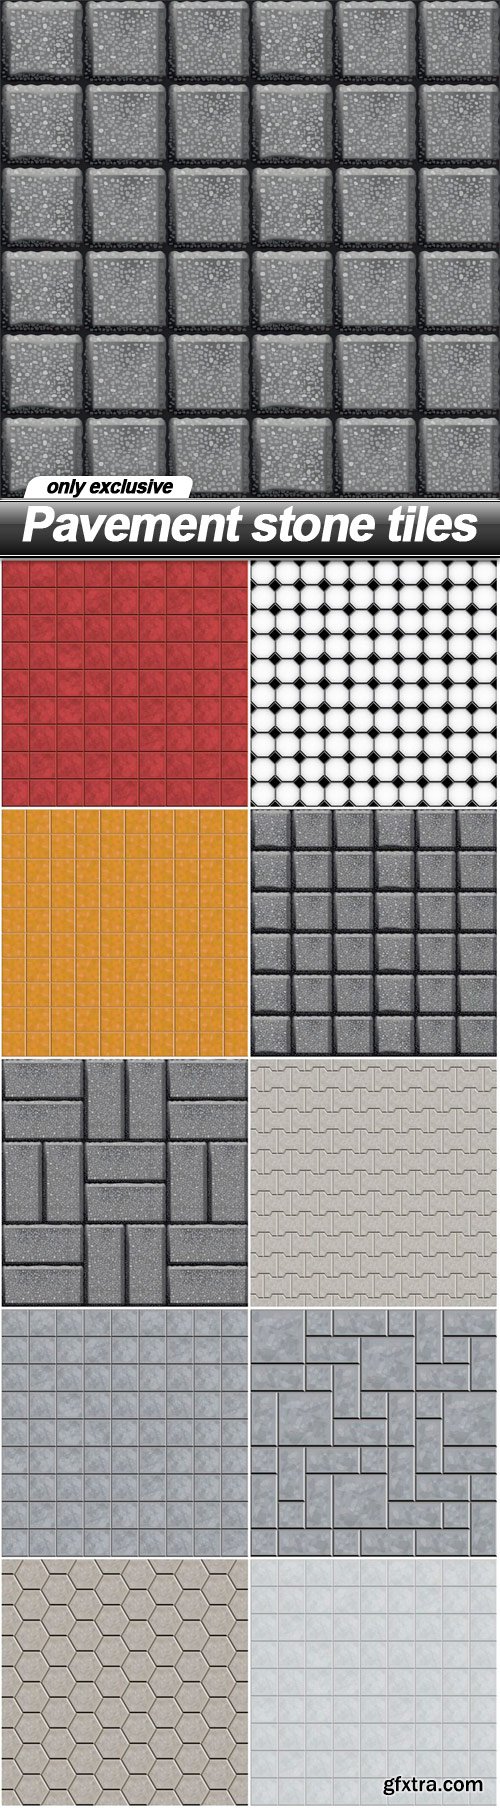 Pavement stone tiles - 10 EPS